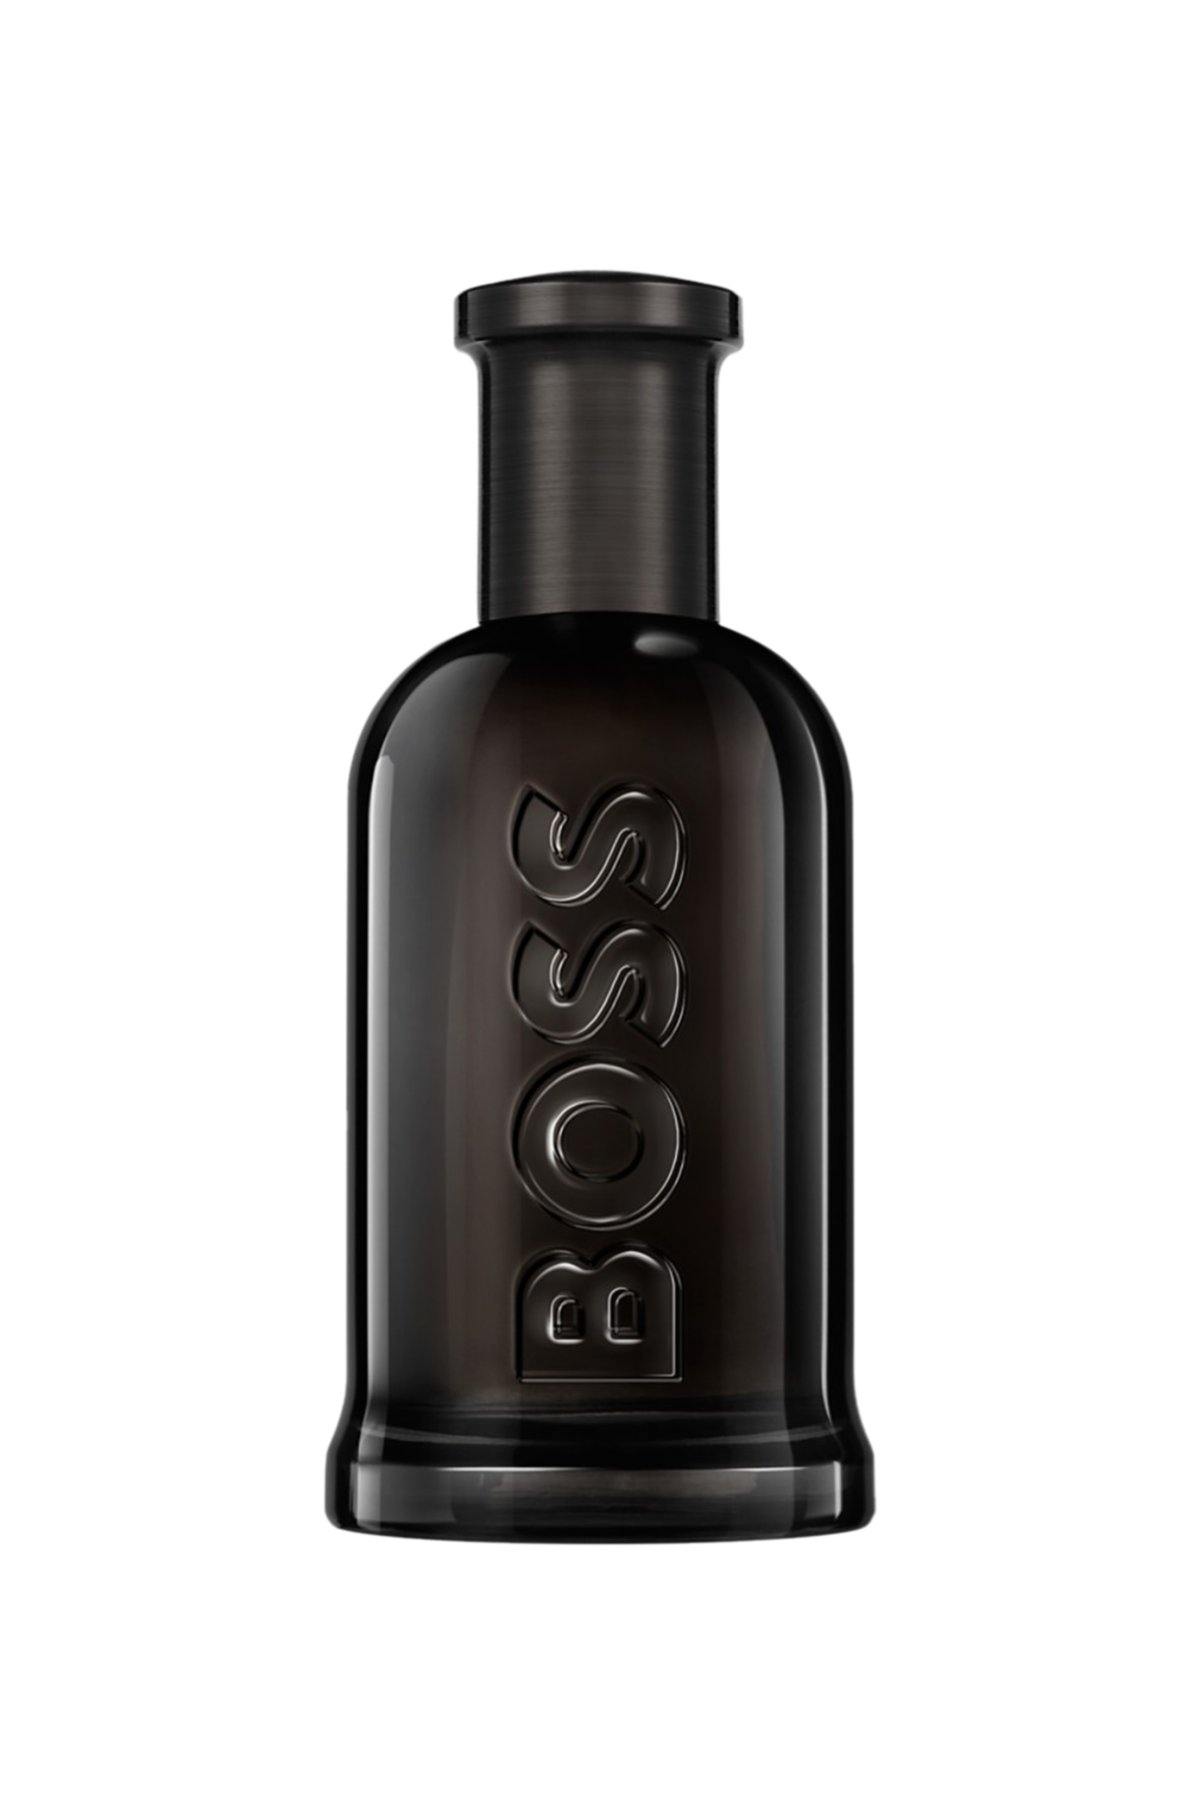 BOSS BOSS Bottled parfum 200ml